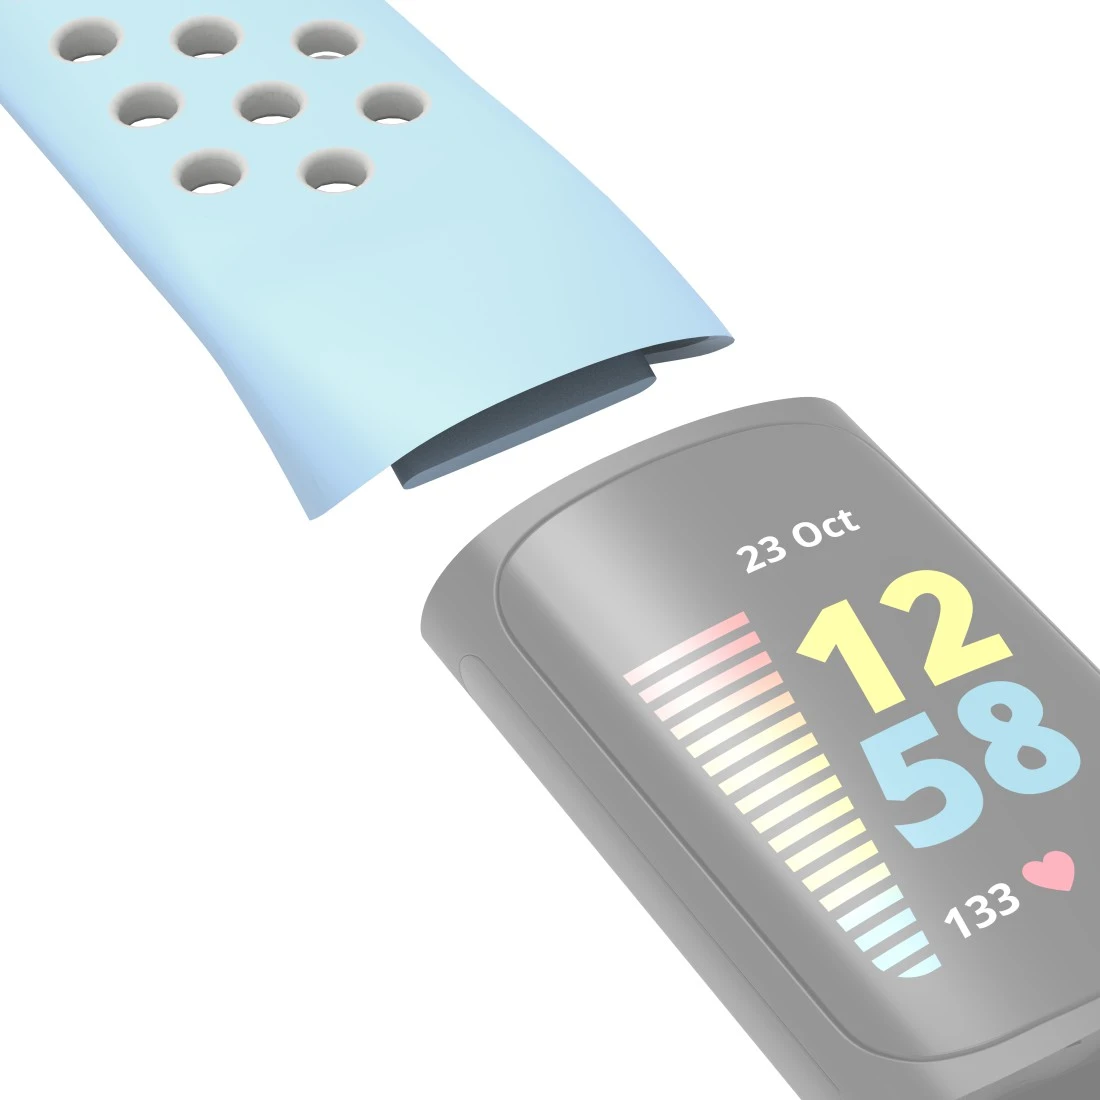 Sportarmband für Fitbit Charge Hama 5, | Uhrenarmband, atmungsaktives H.blau/Grau